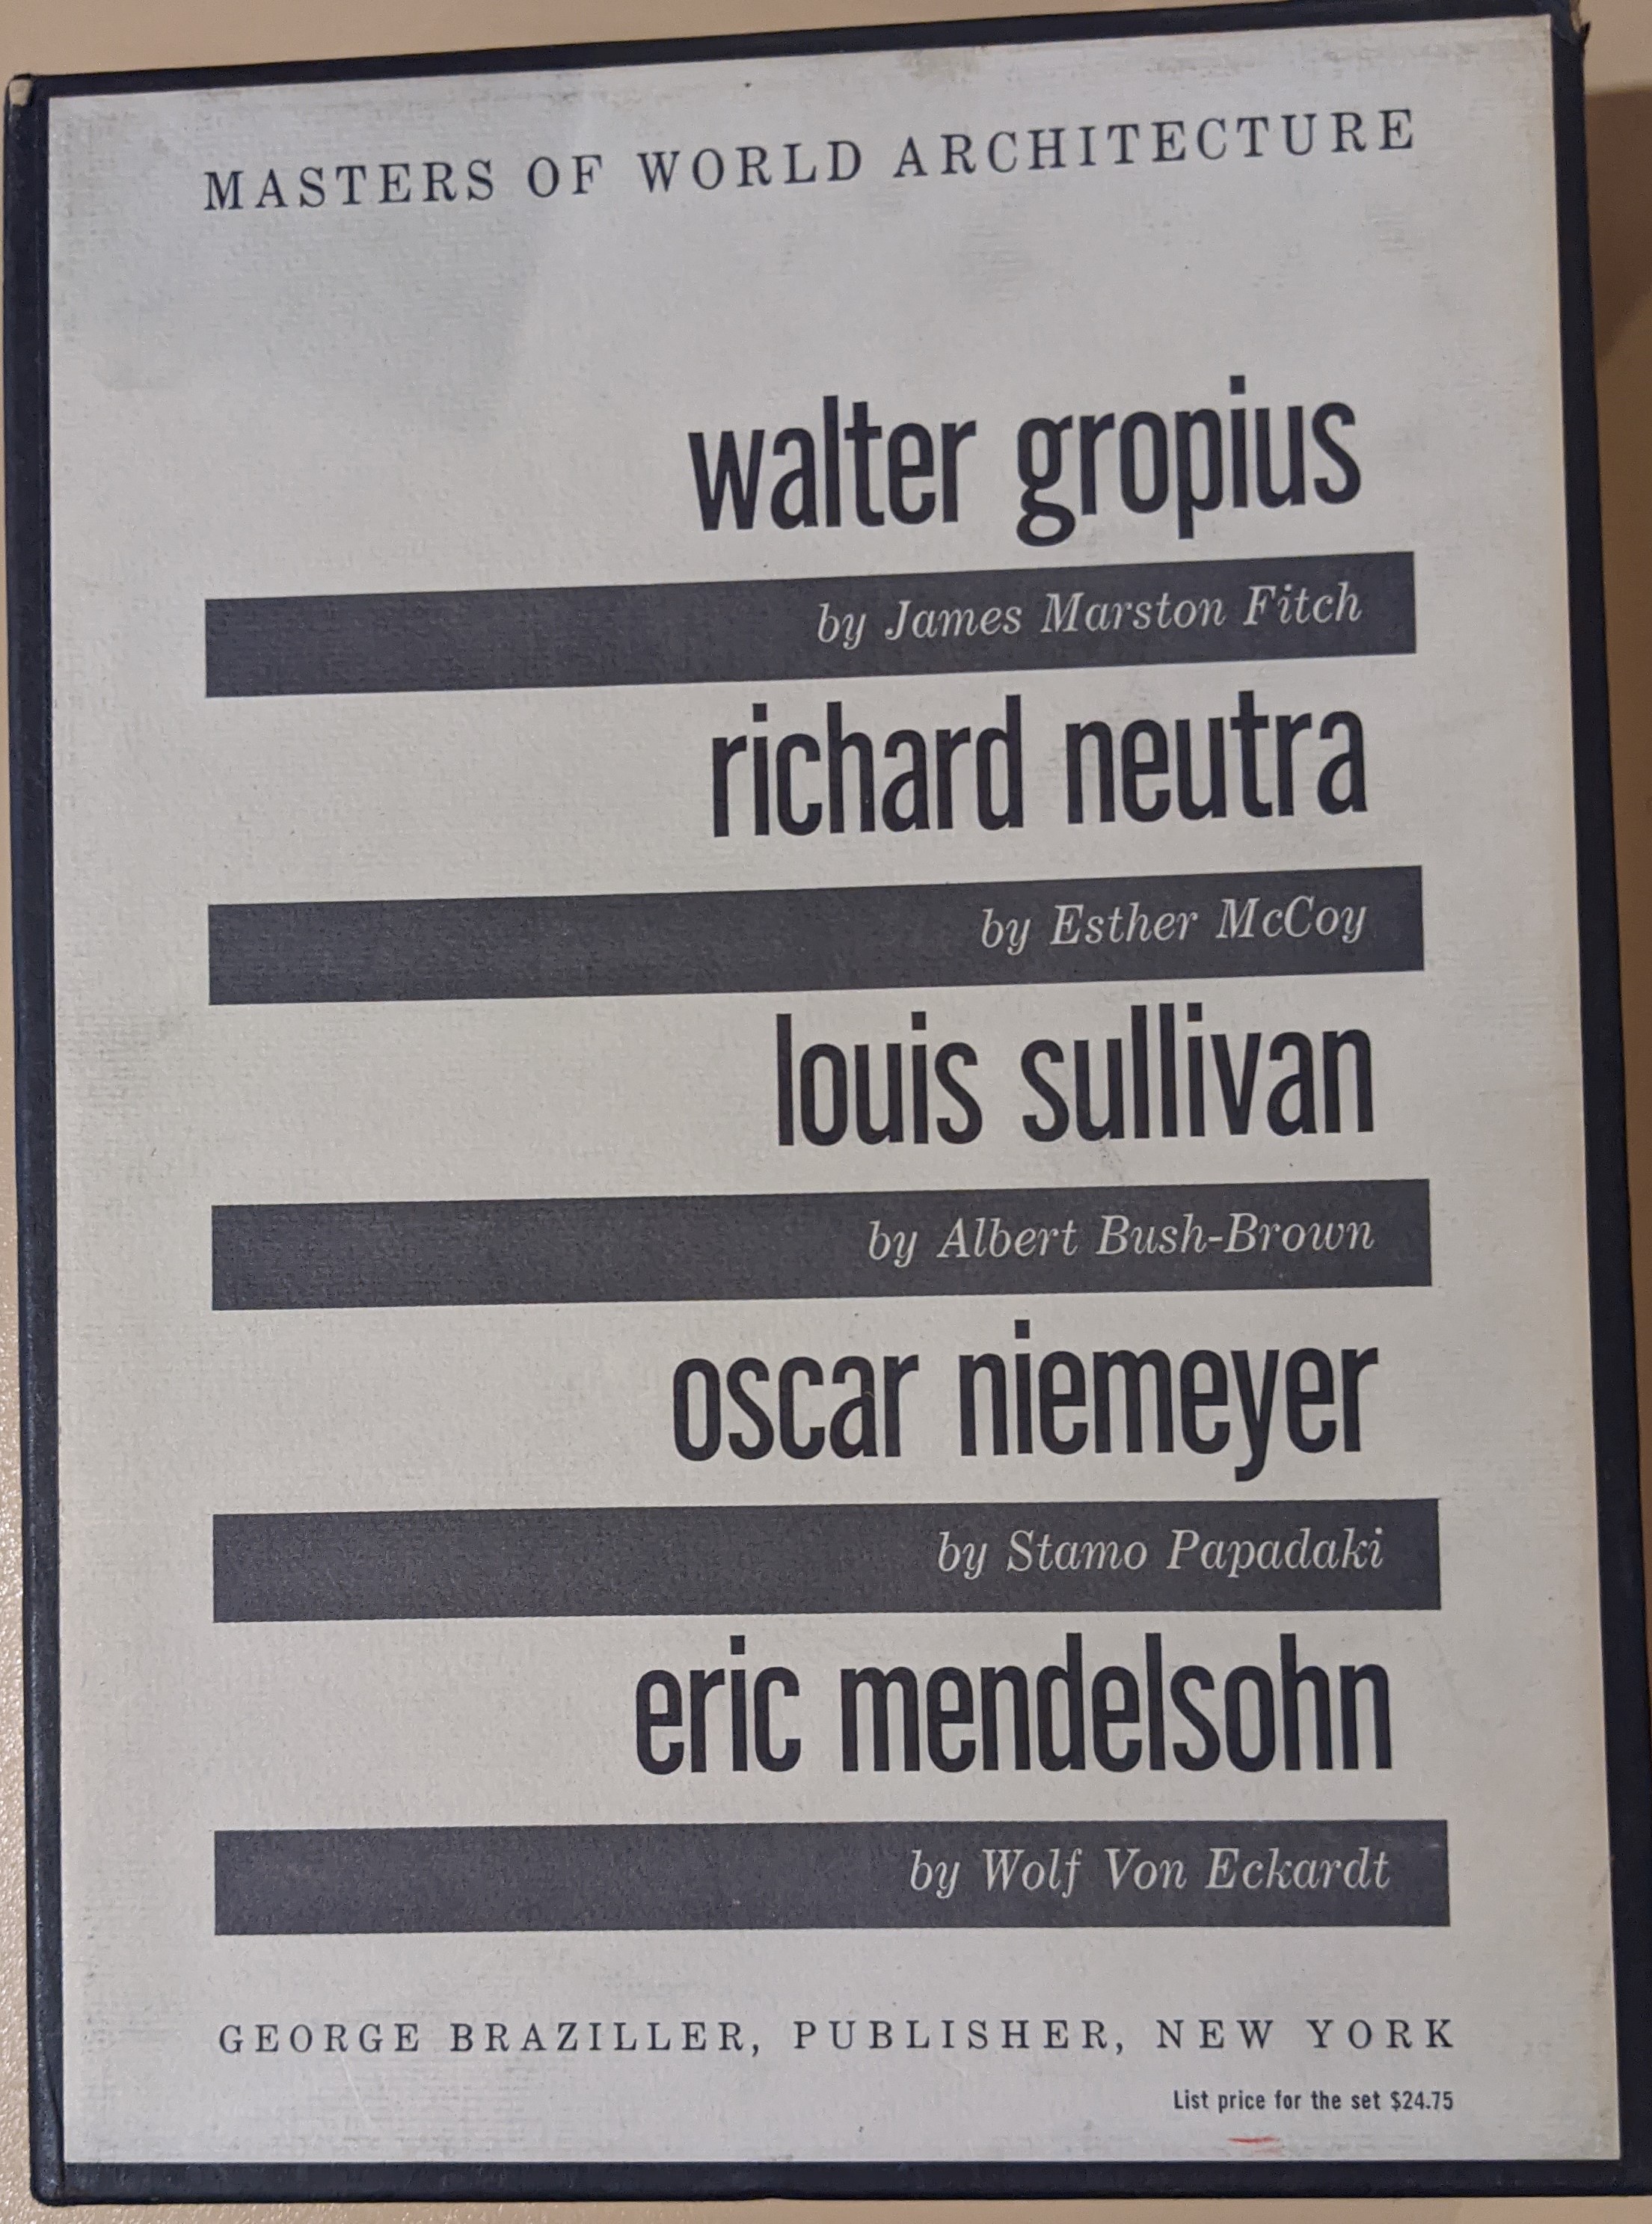 Walter Gropius, Richard Neutra, Louis Sullivan, Oscar Niemeyer